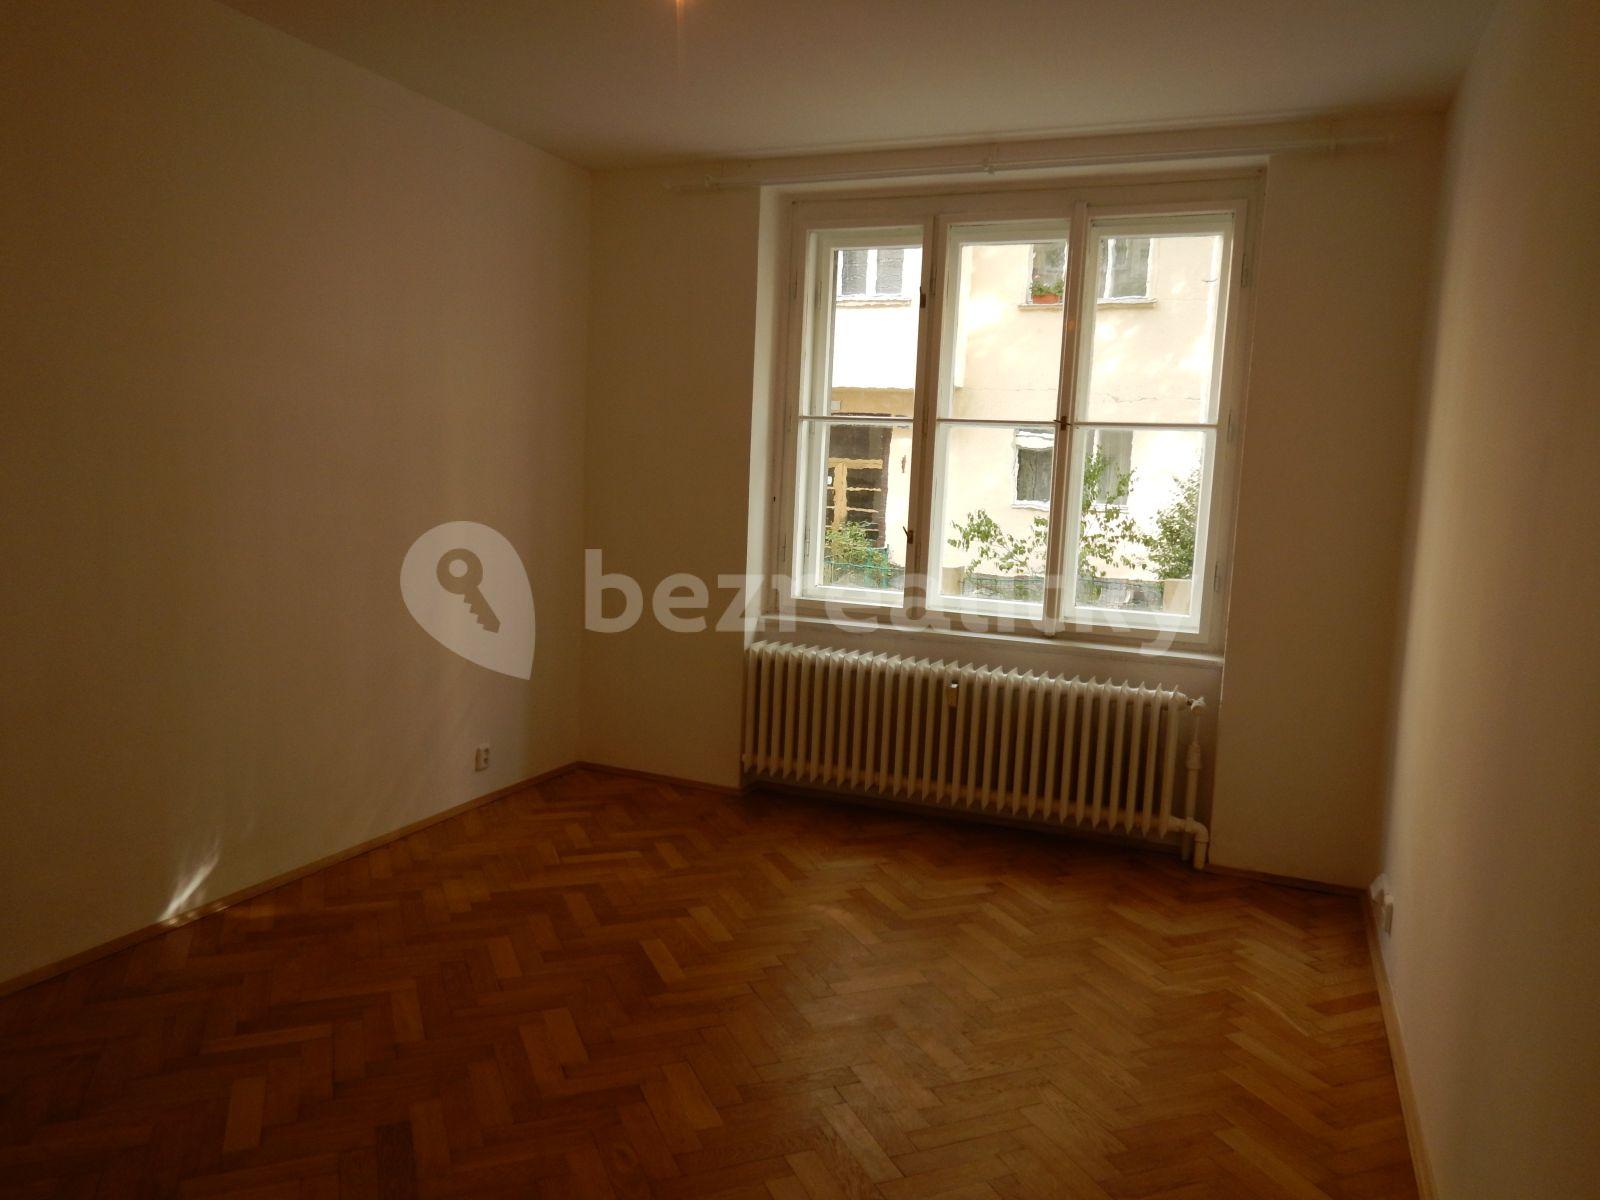 2 bedroom flat to rent, 48 m², Kouřimská, Prague, Prague